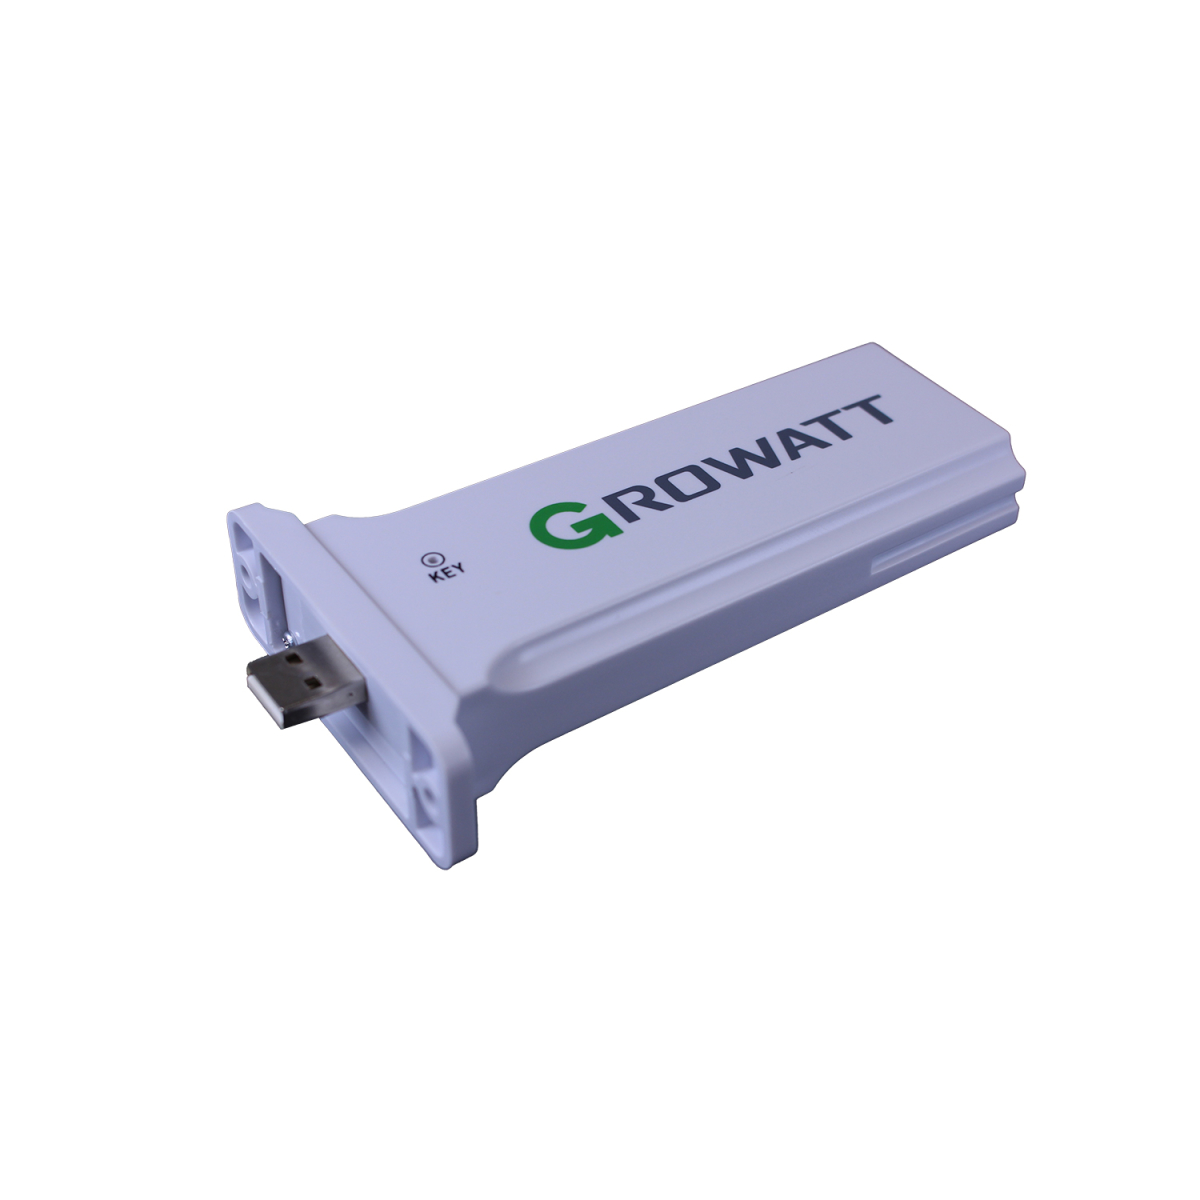 Growatt Shine WiFi-F Messgerät für Off-Grid Wechselrichter